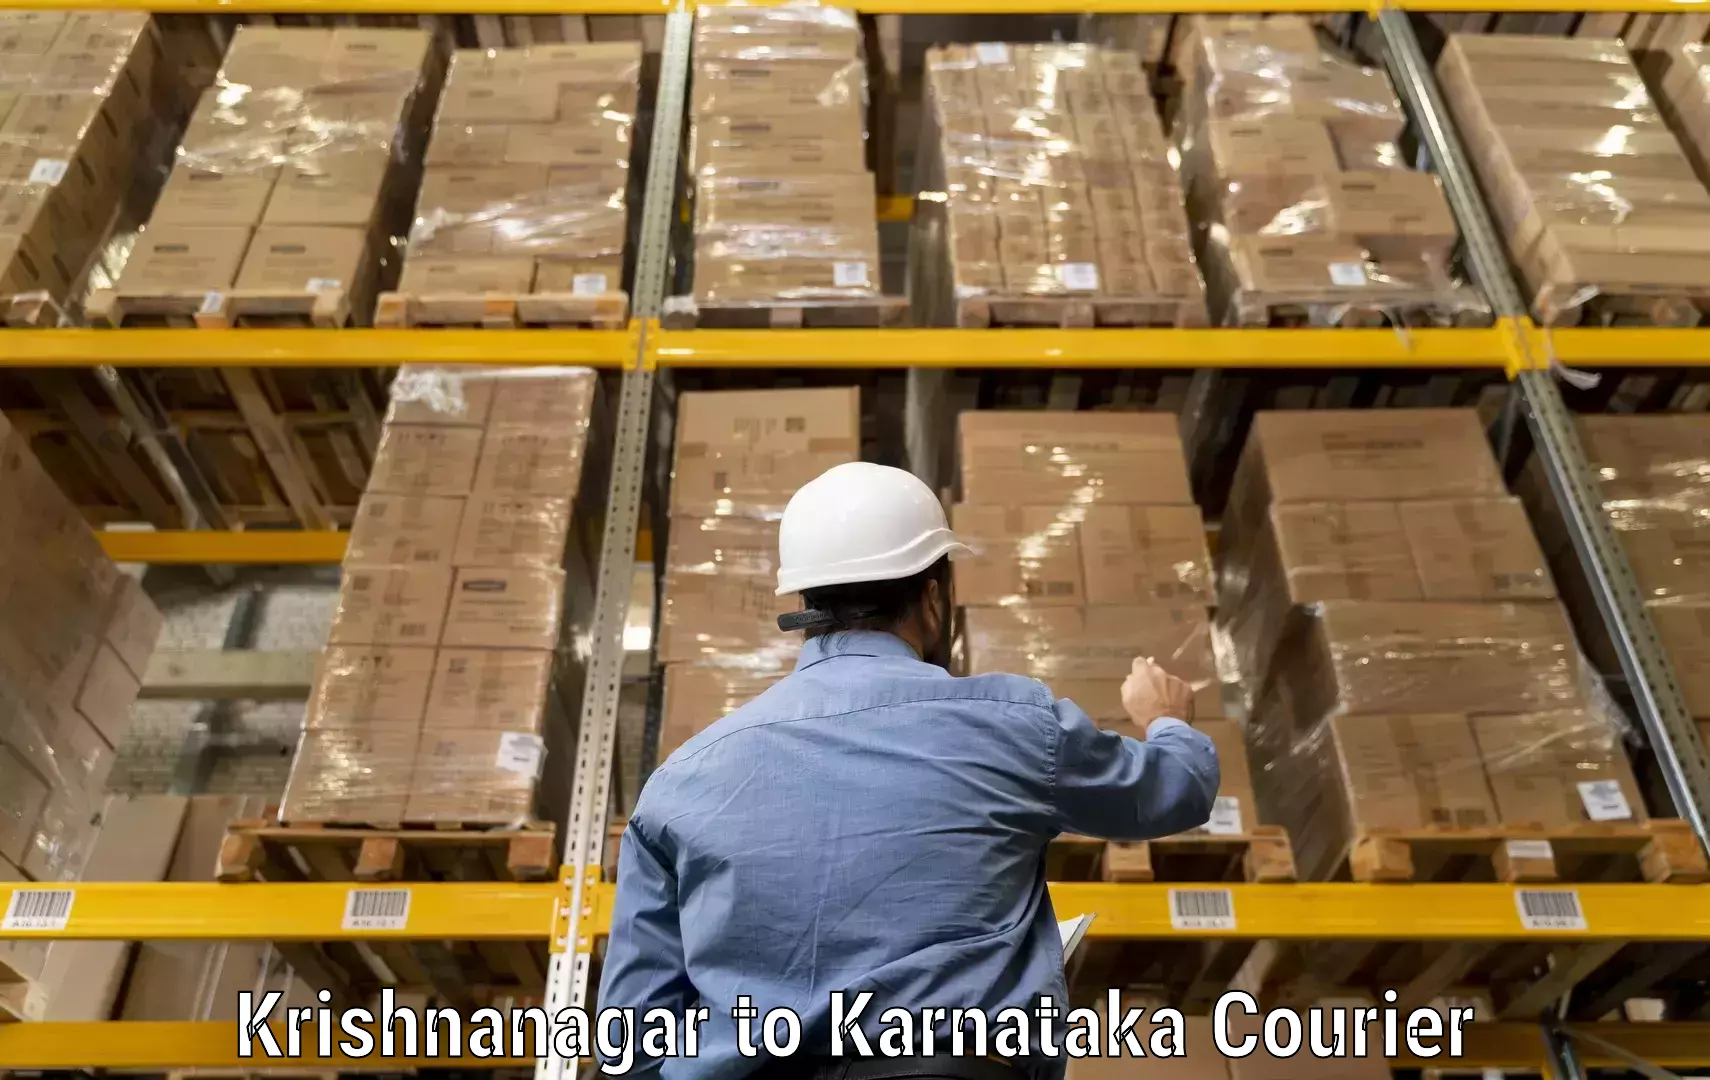 Global courier networks Krishnanagar to Gundlupete